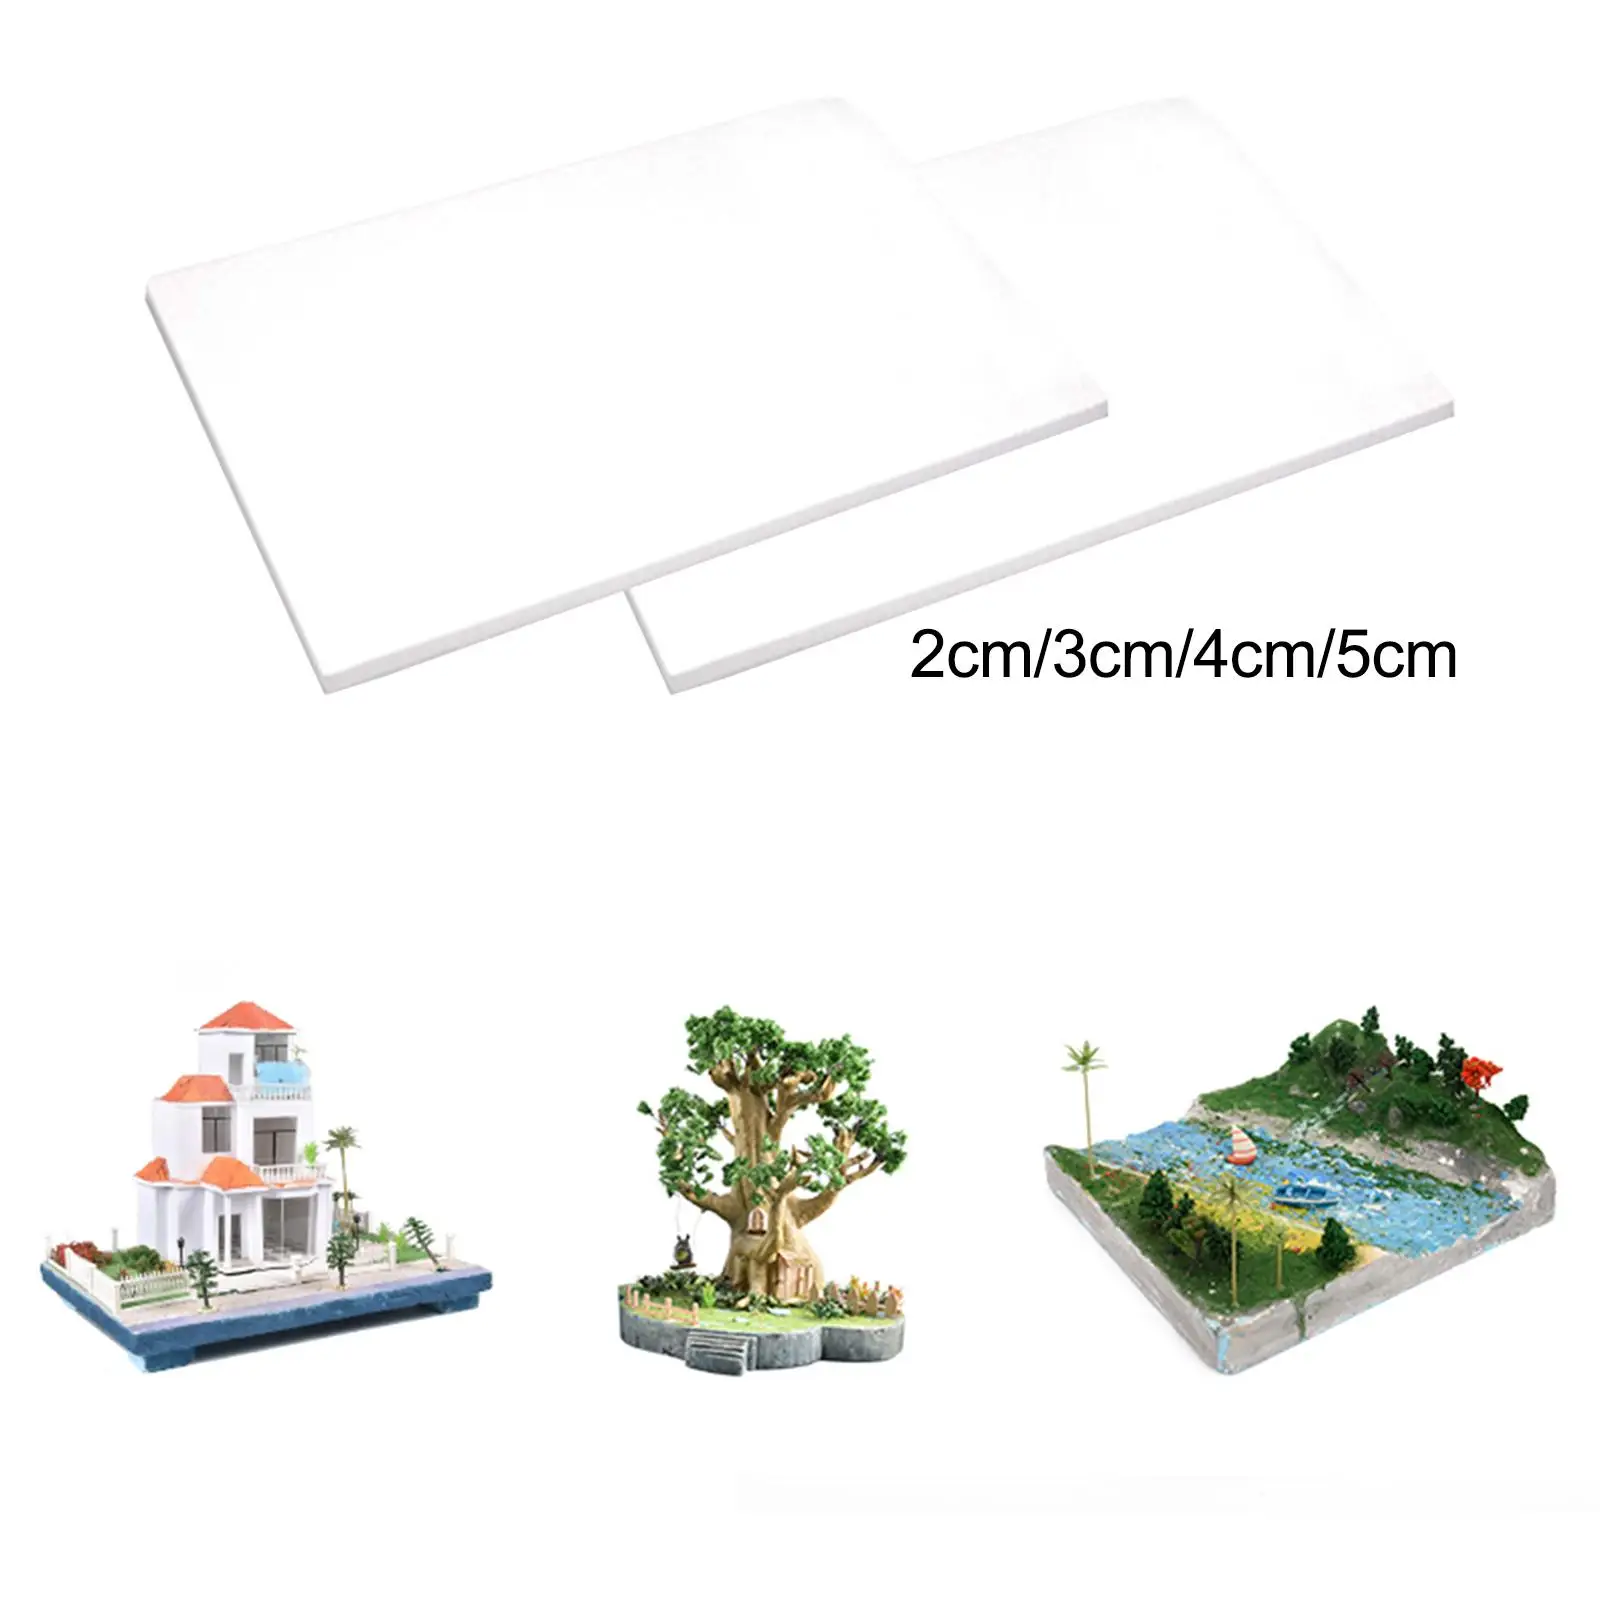 2x Diorama Base Scenery Accessories Micro Landscape Architecture Model Miniature Building Materials Rectangular Blocks